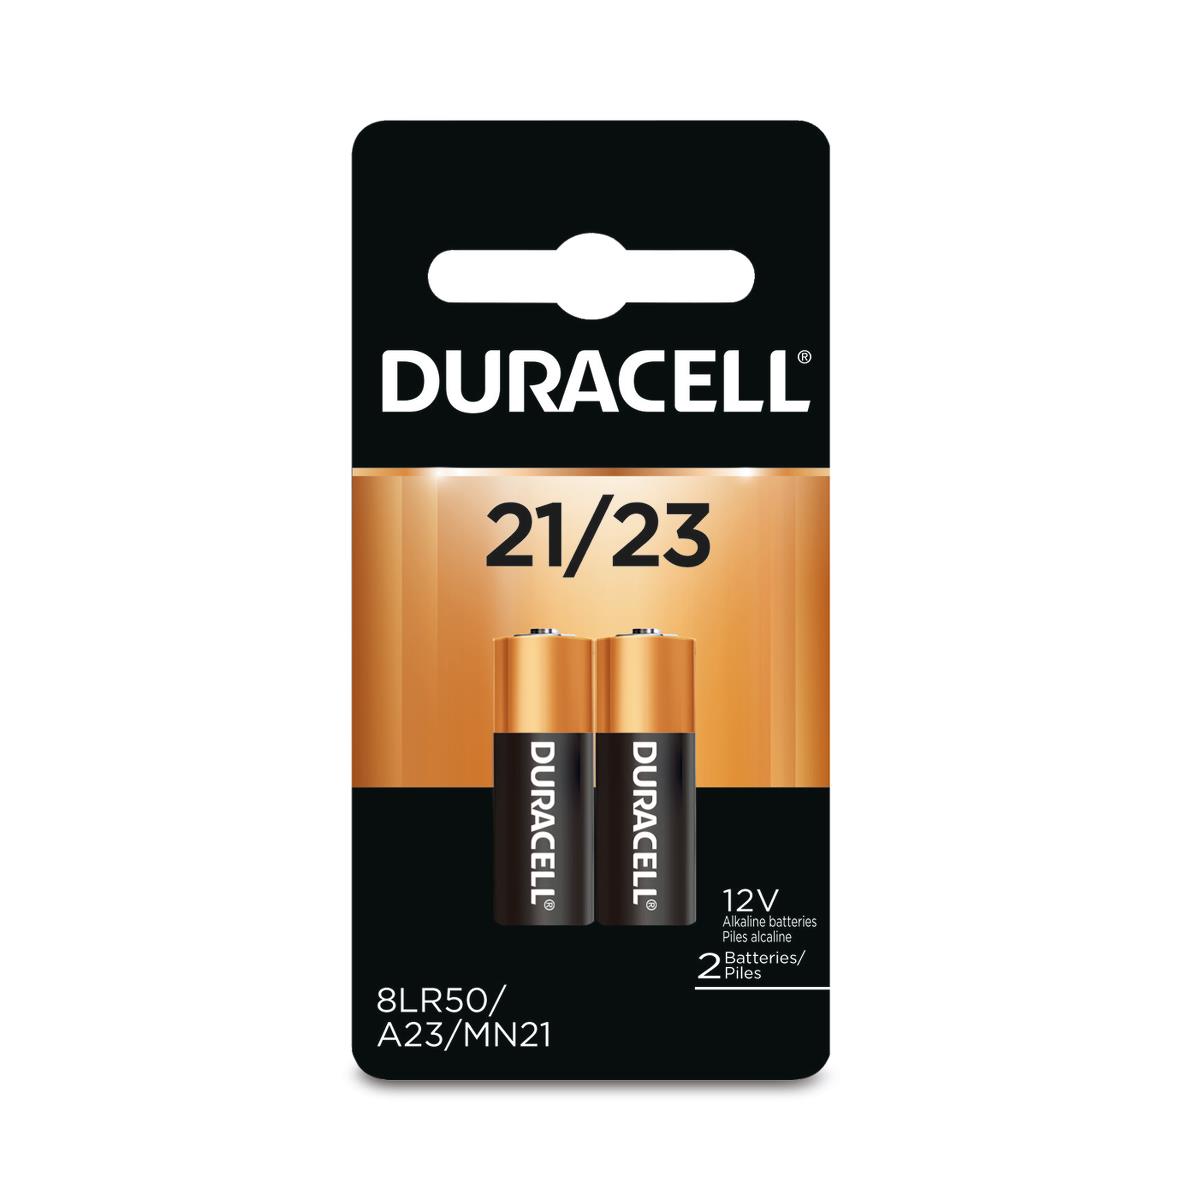 4 Pack - Duracell Ultra Power Alkaline Batteries AAAA 2 ea 